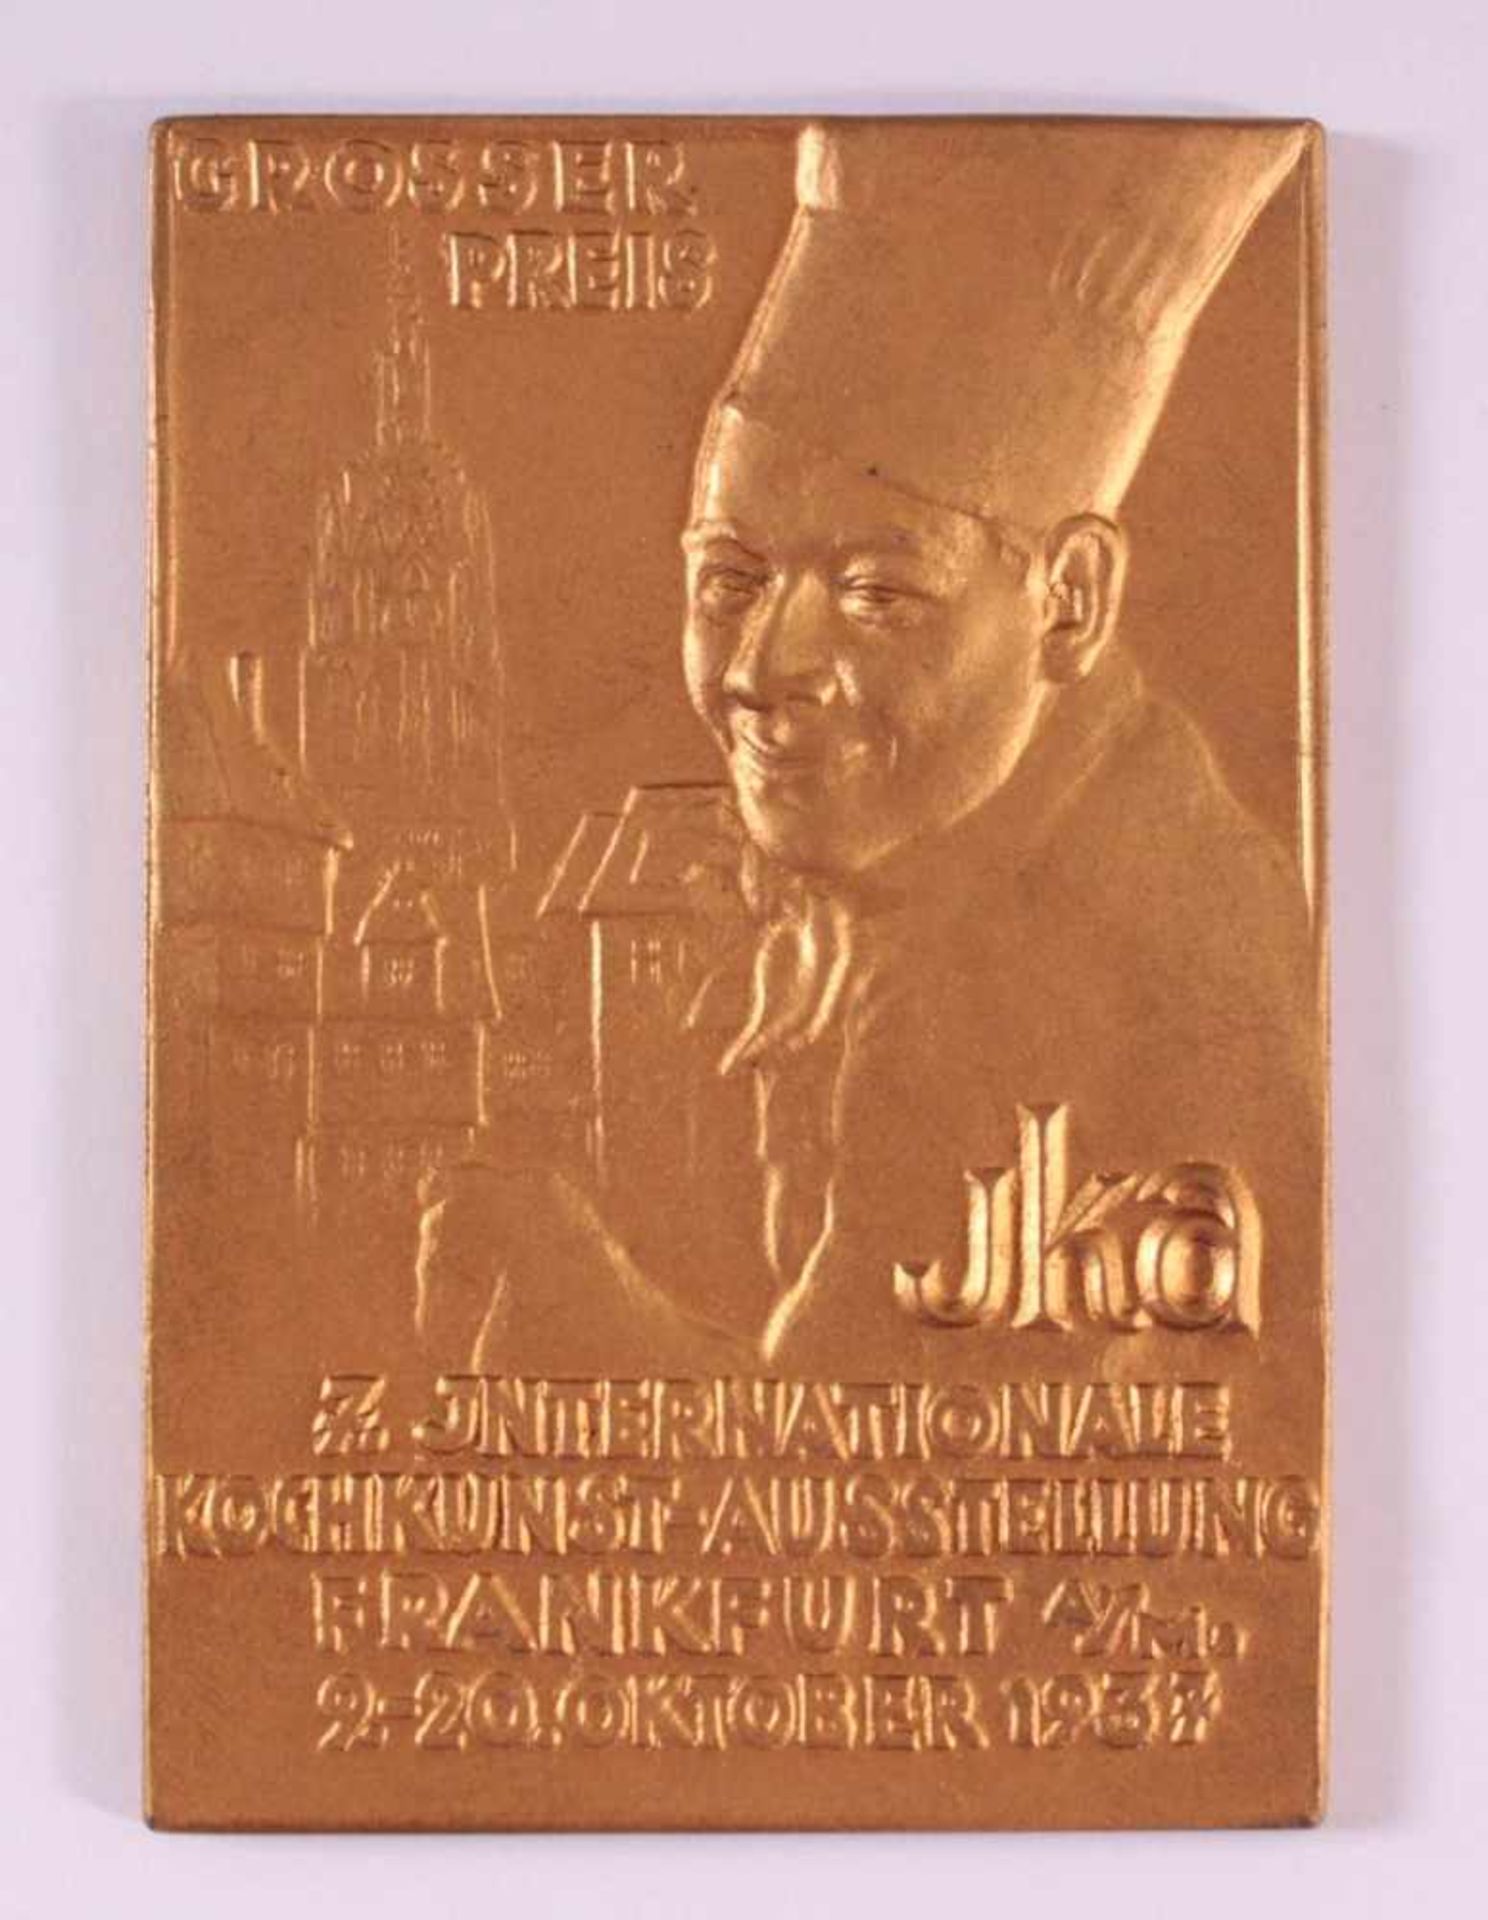 Vergoldete Plakette, Großer Preis IKA 19373. Internationale Kochkunst-Ausstellung, Frankfurt am